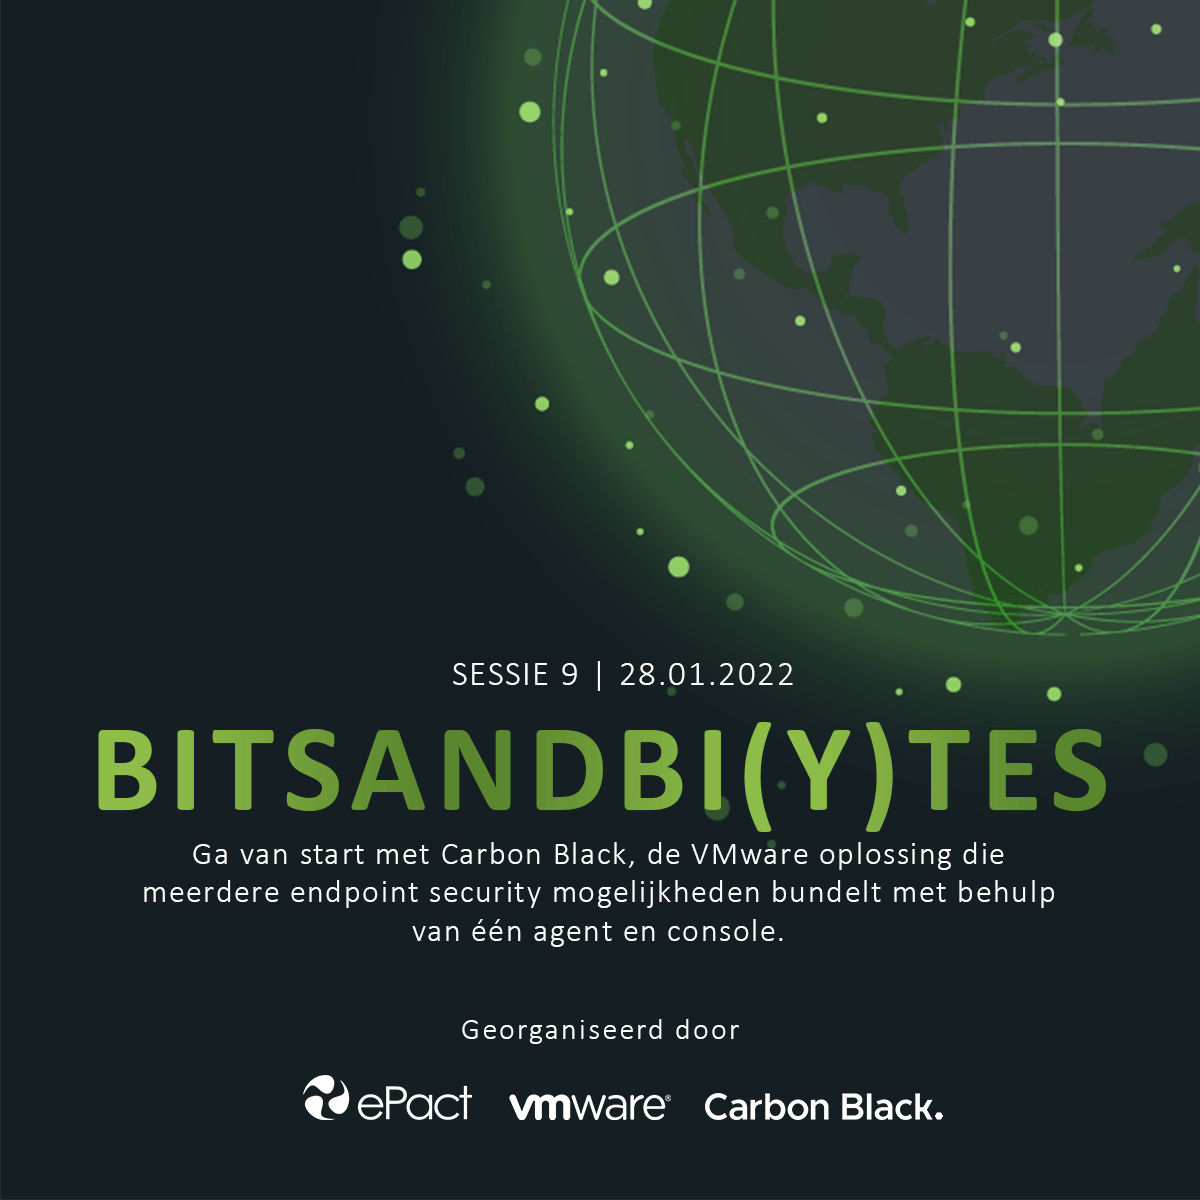 BITSANDBI(Y)TES by ePact & VMware Carbon Black square image